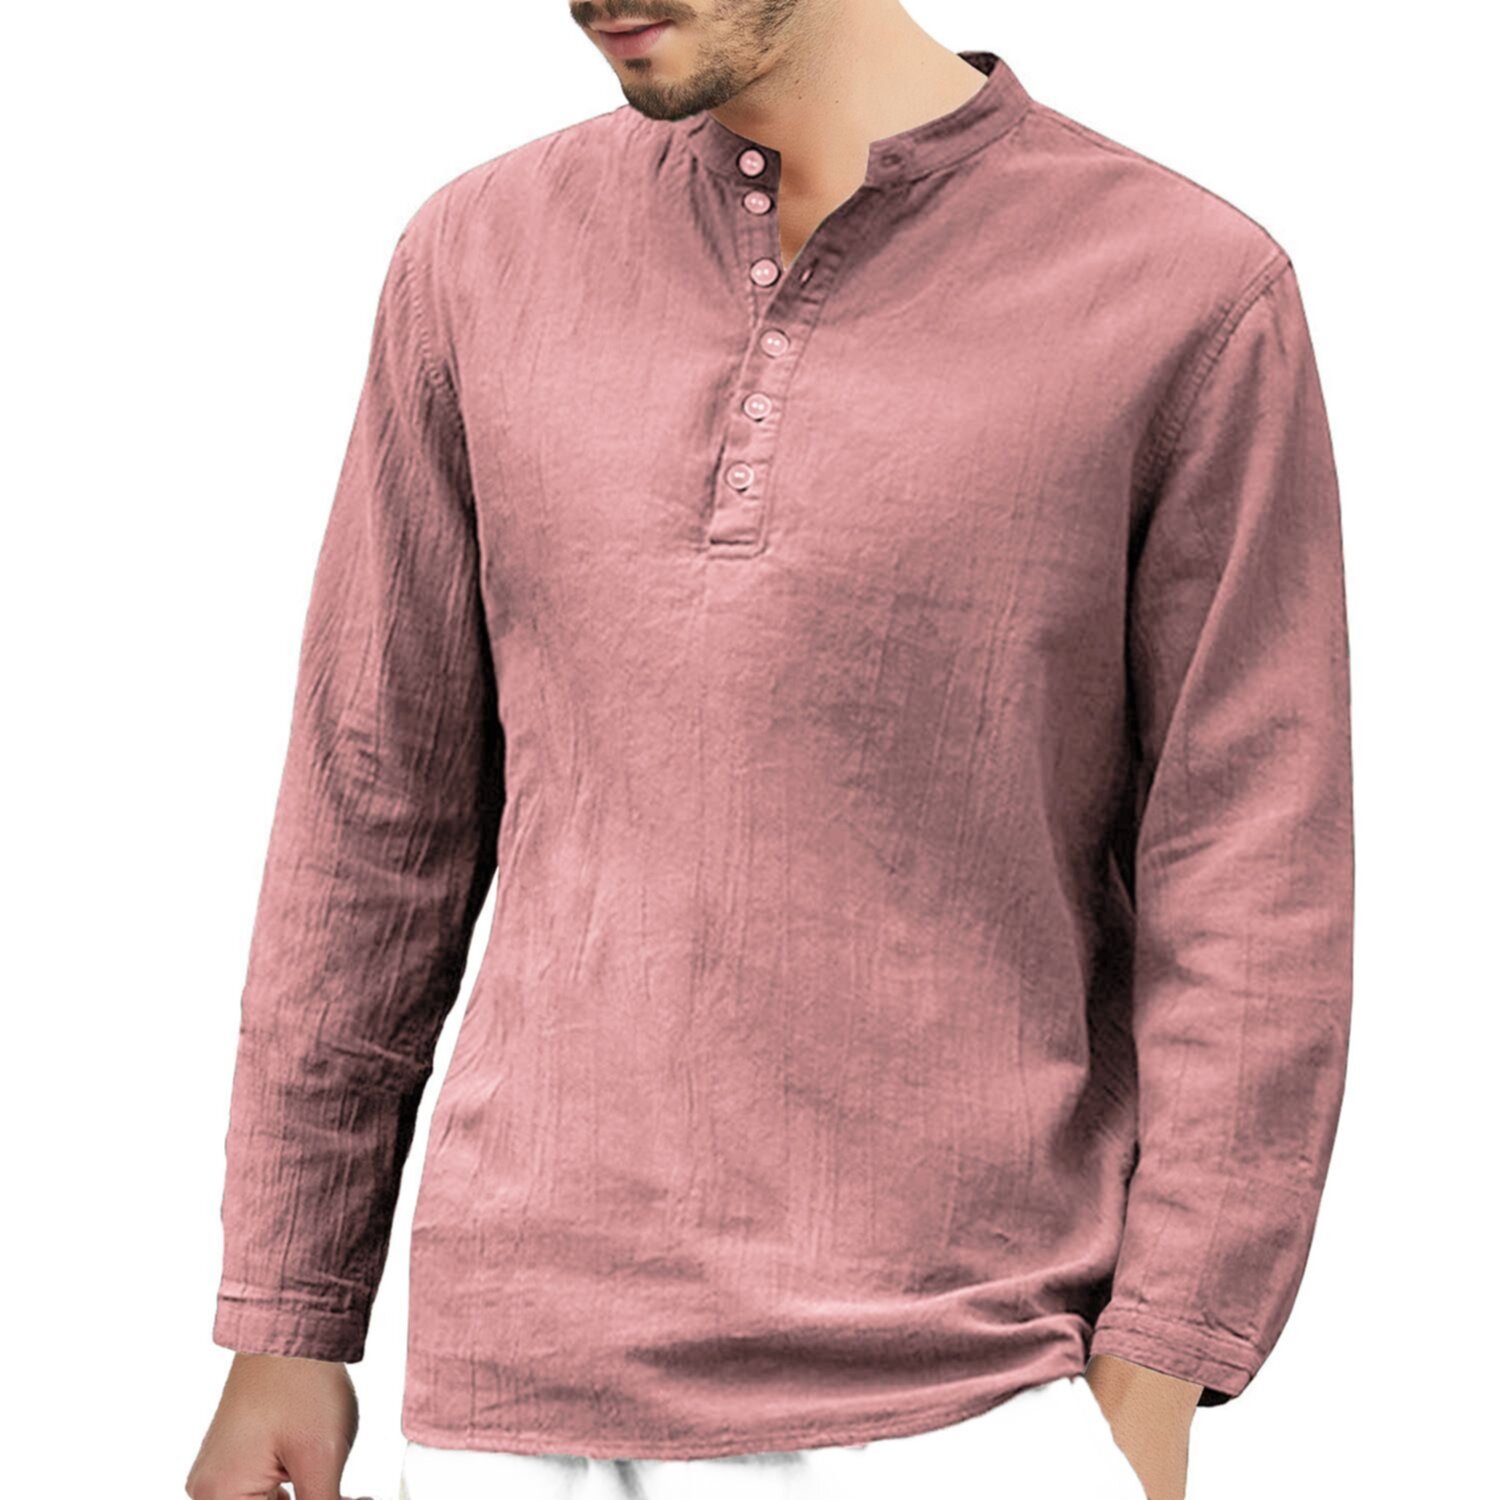 Solid cotton linen long sleeve round neck button shirt